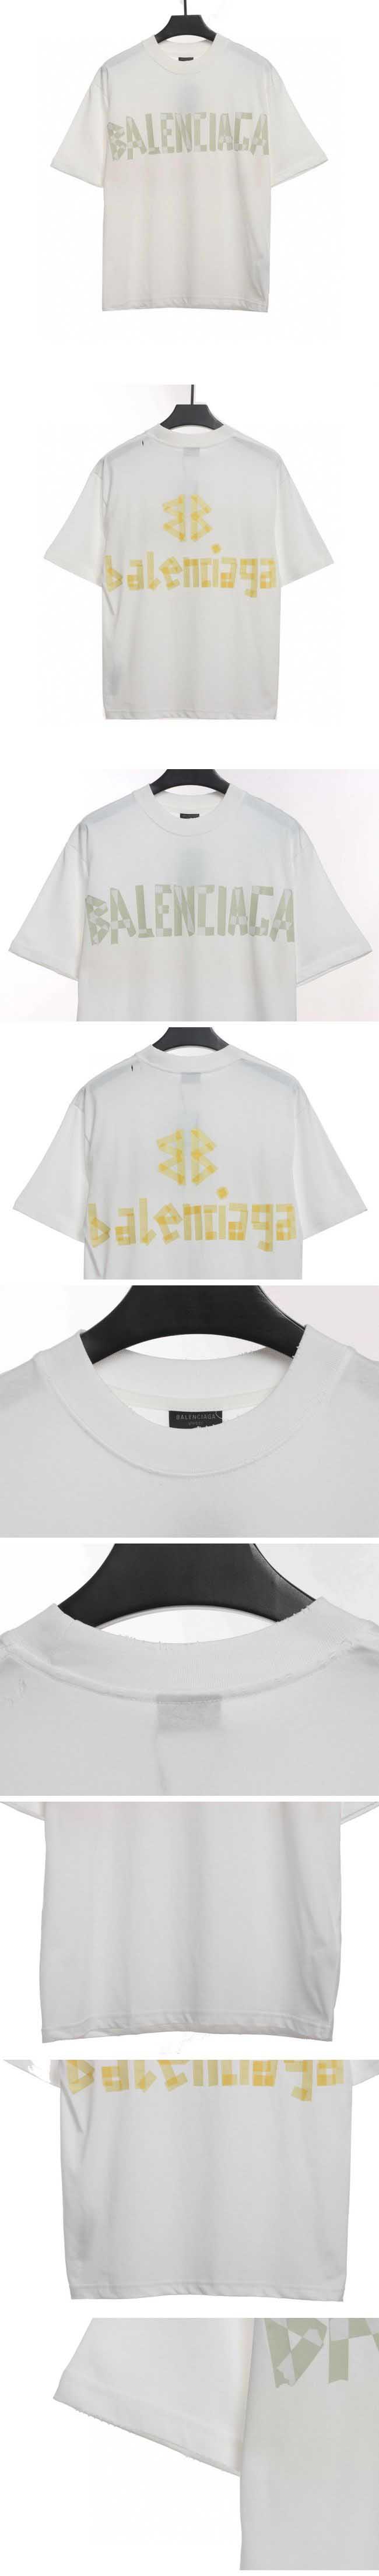 Balenciaga Tape Logo Tee White バレンシアガ テープ ロゴ Tシャツ ホワイト